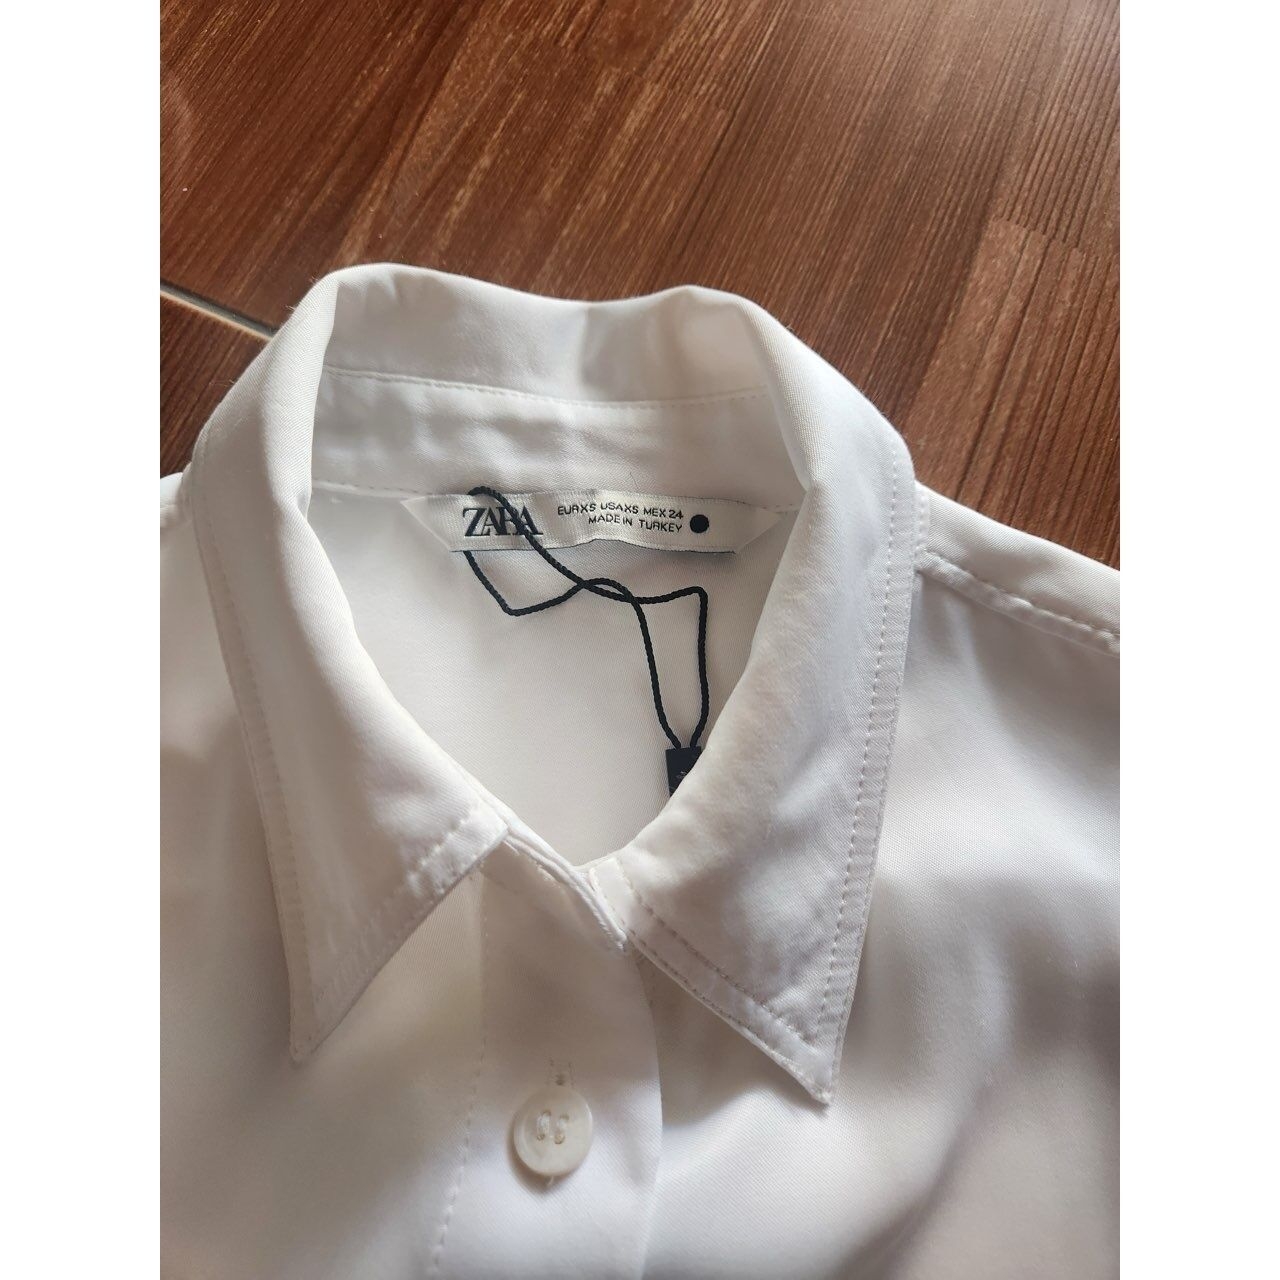 Zara Off White Shirt